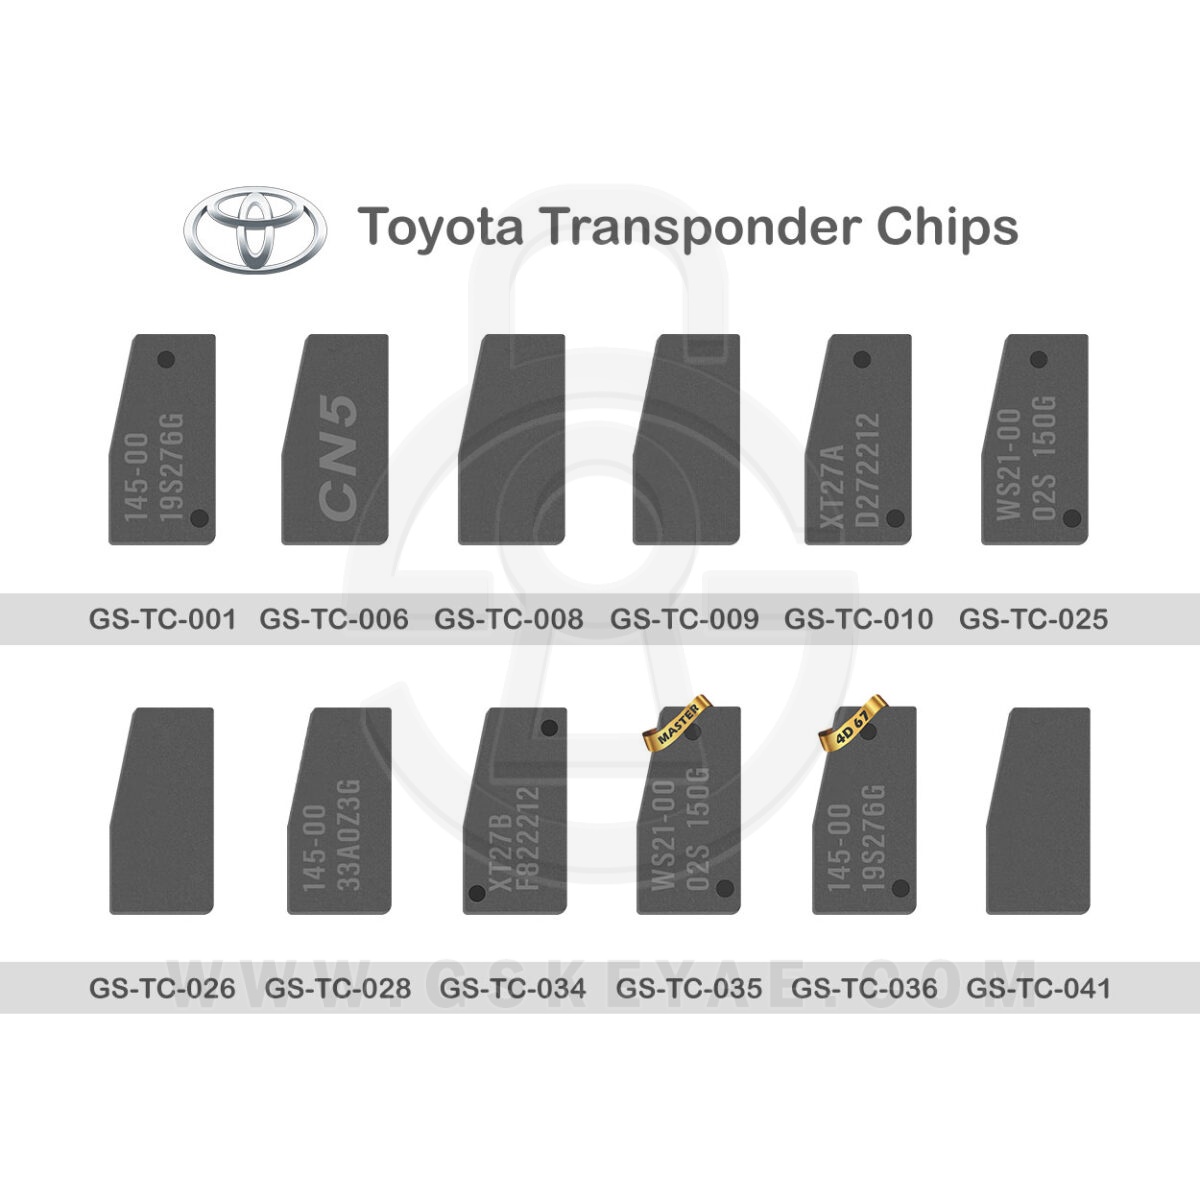 Toyota Transponder Chips 4D67 - 4D72 (G-Chip) - H Chip - 4C - 4D60 - CN5 - XT27A - XT27B All in One